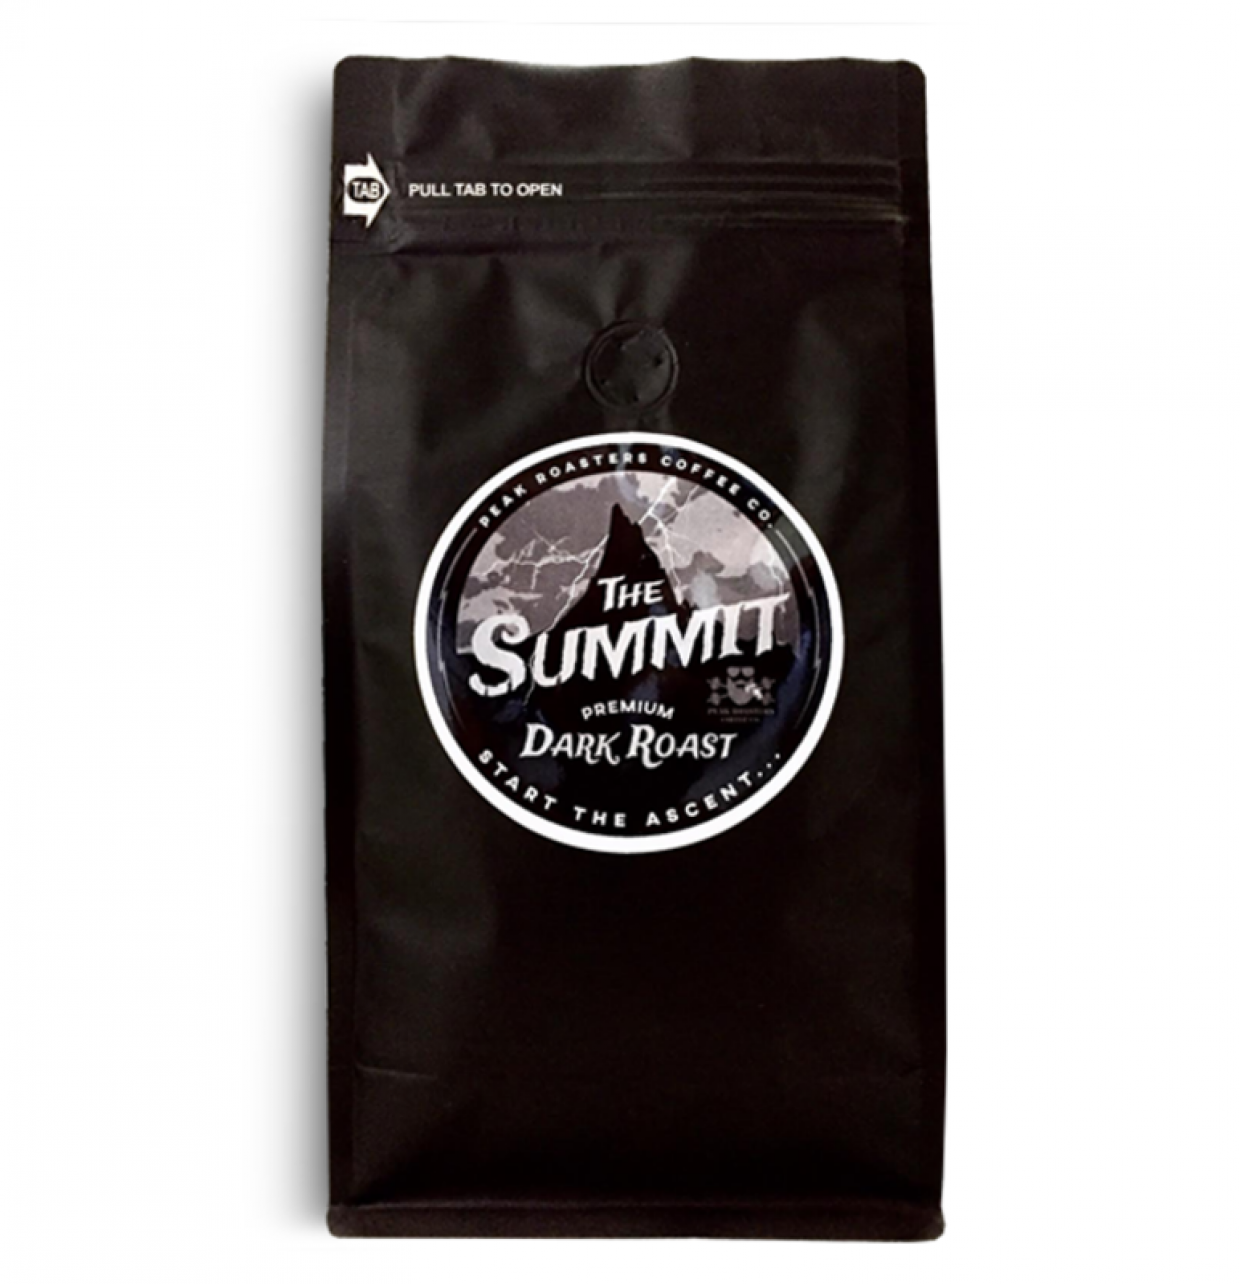 'The Summit' Premium Dark Roast